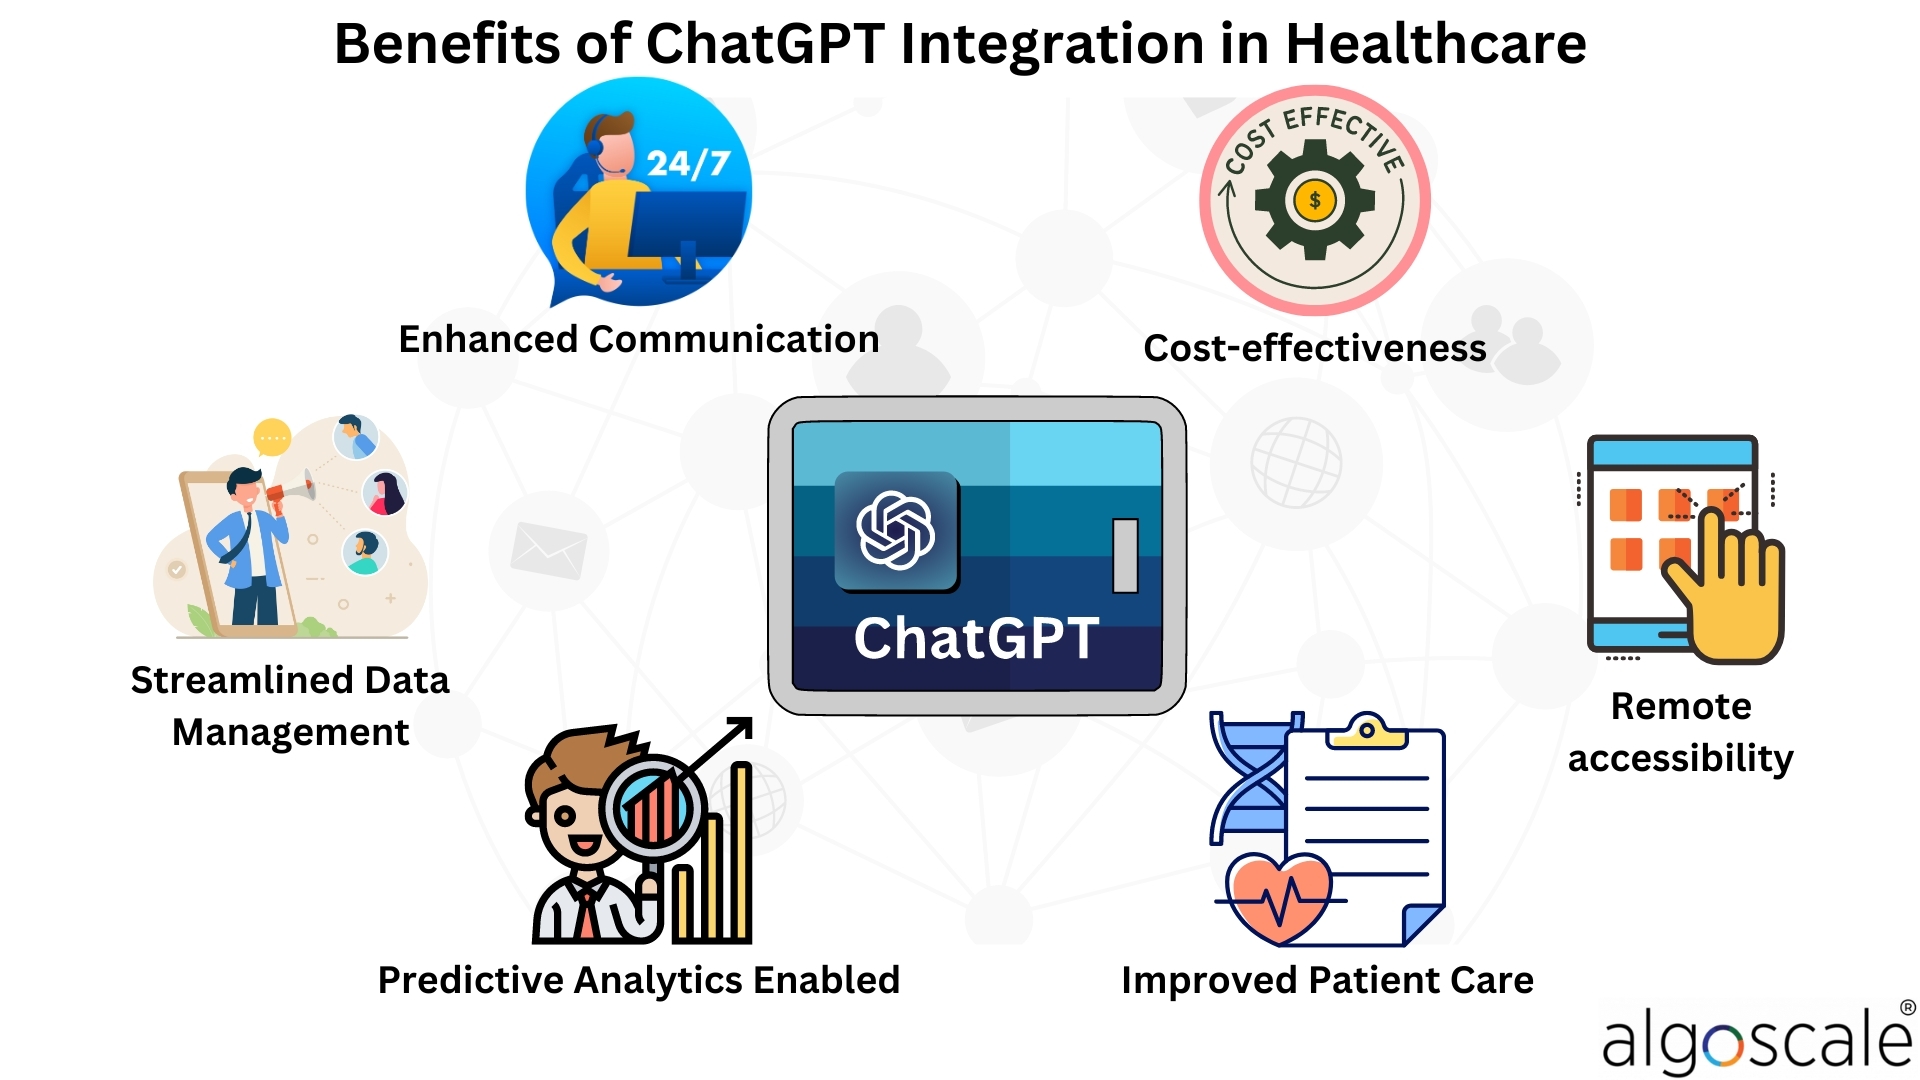 chatgp-integration-in-healthcare